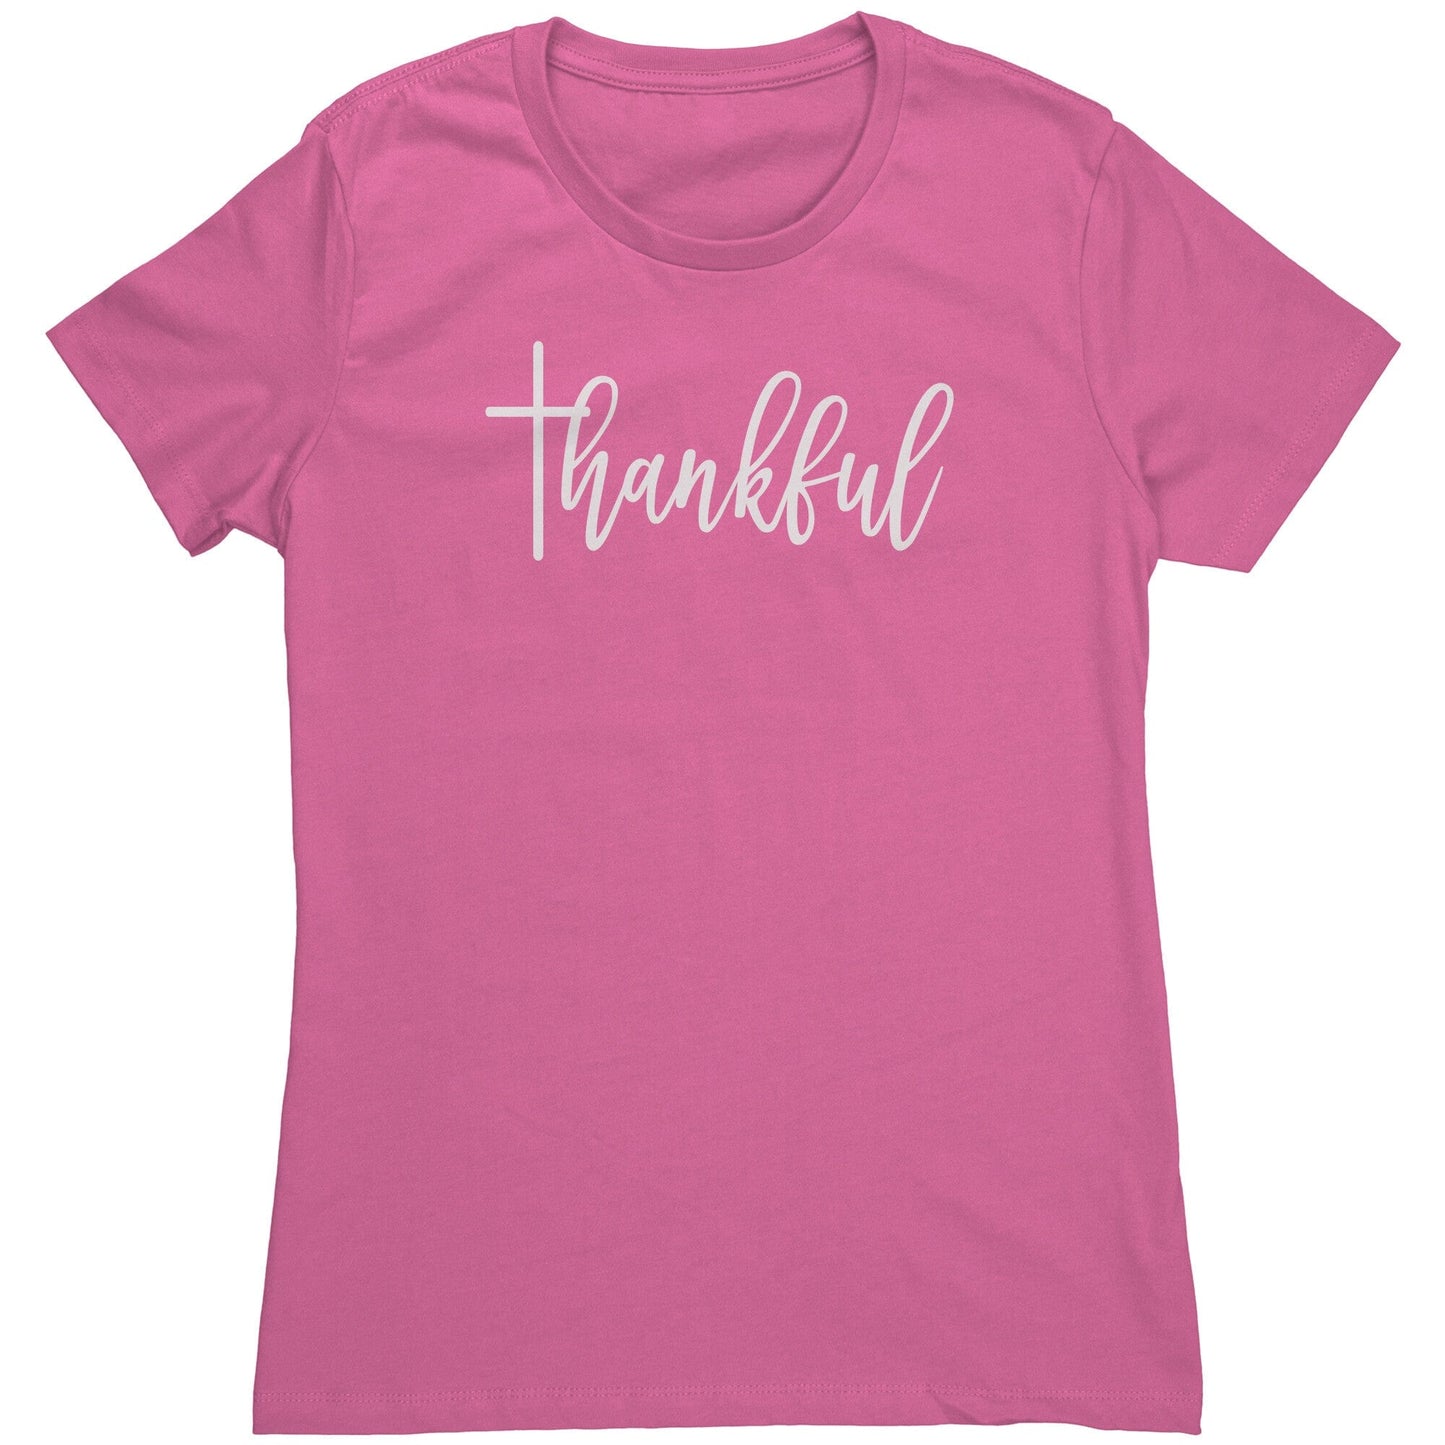 Thankful Women's T-Shirt